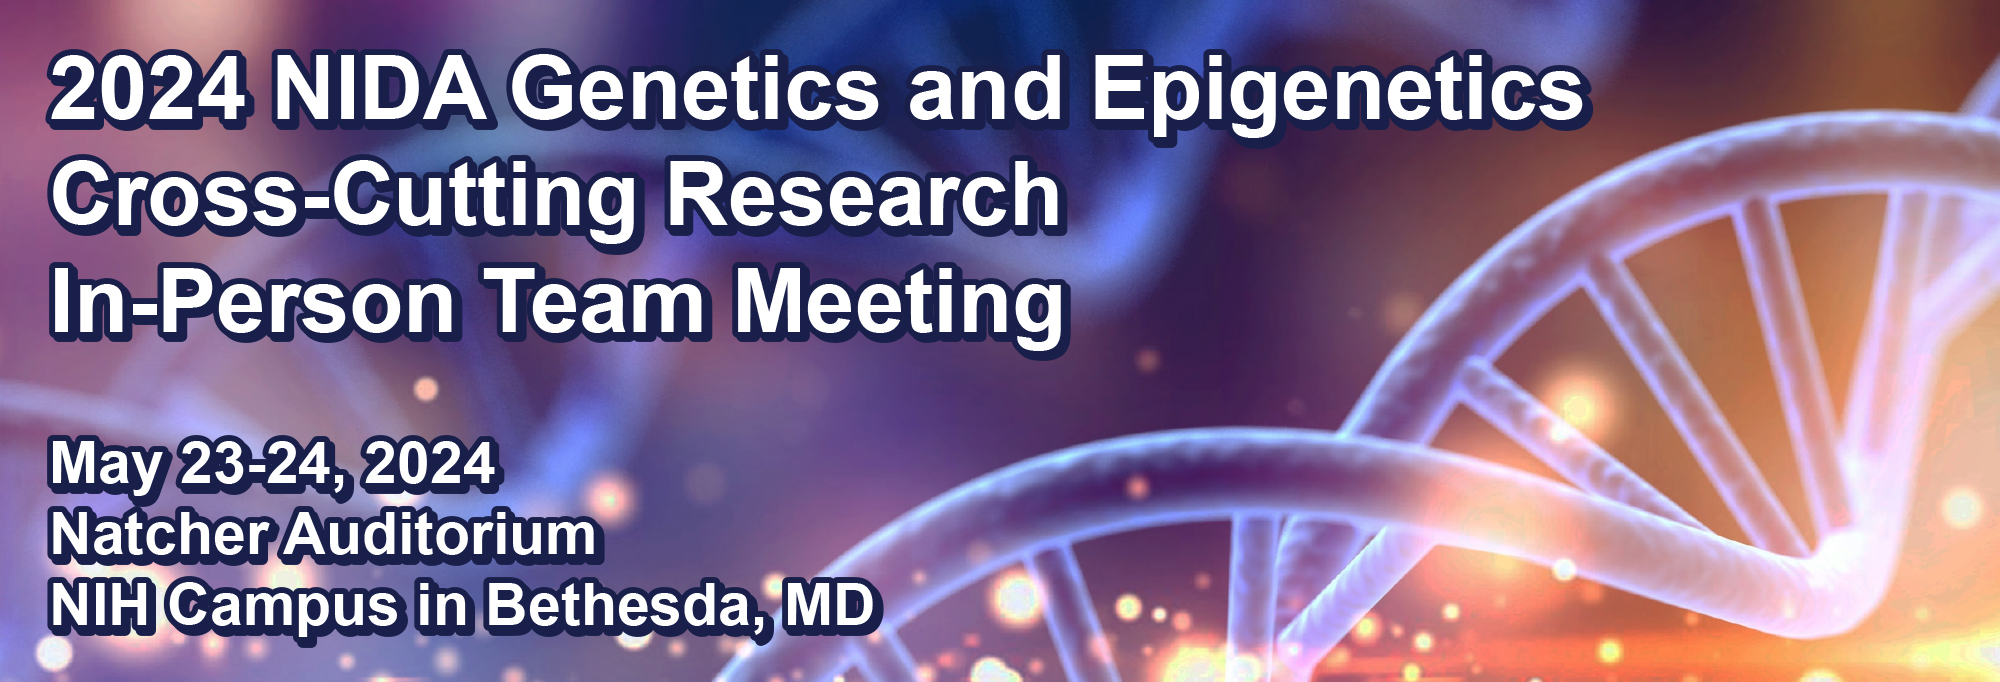 NIDA - Genetics and Epigenetics Cross Cutting Research